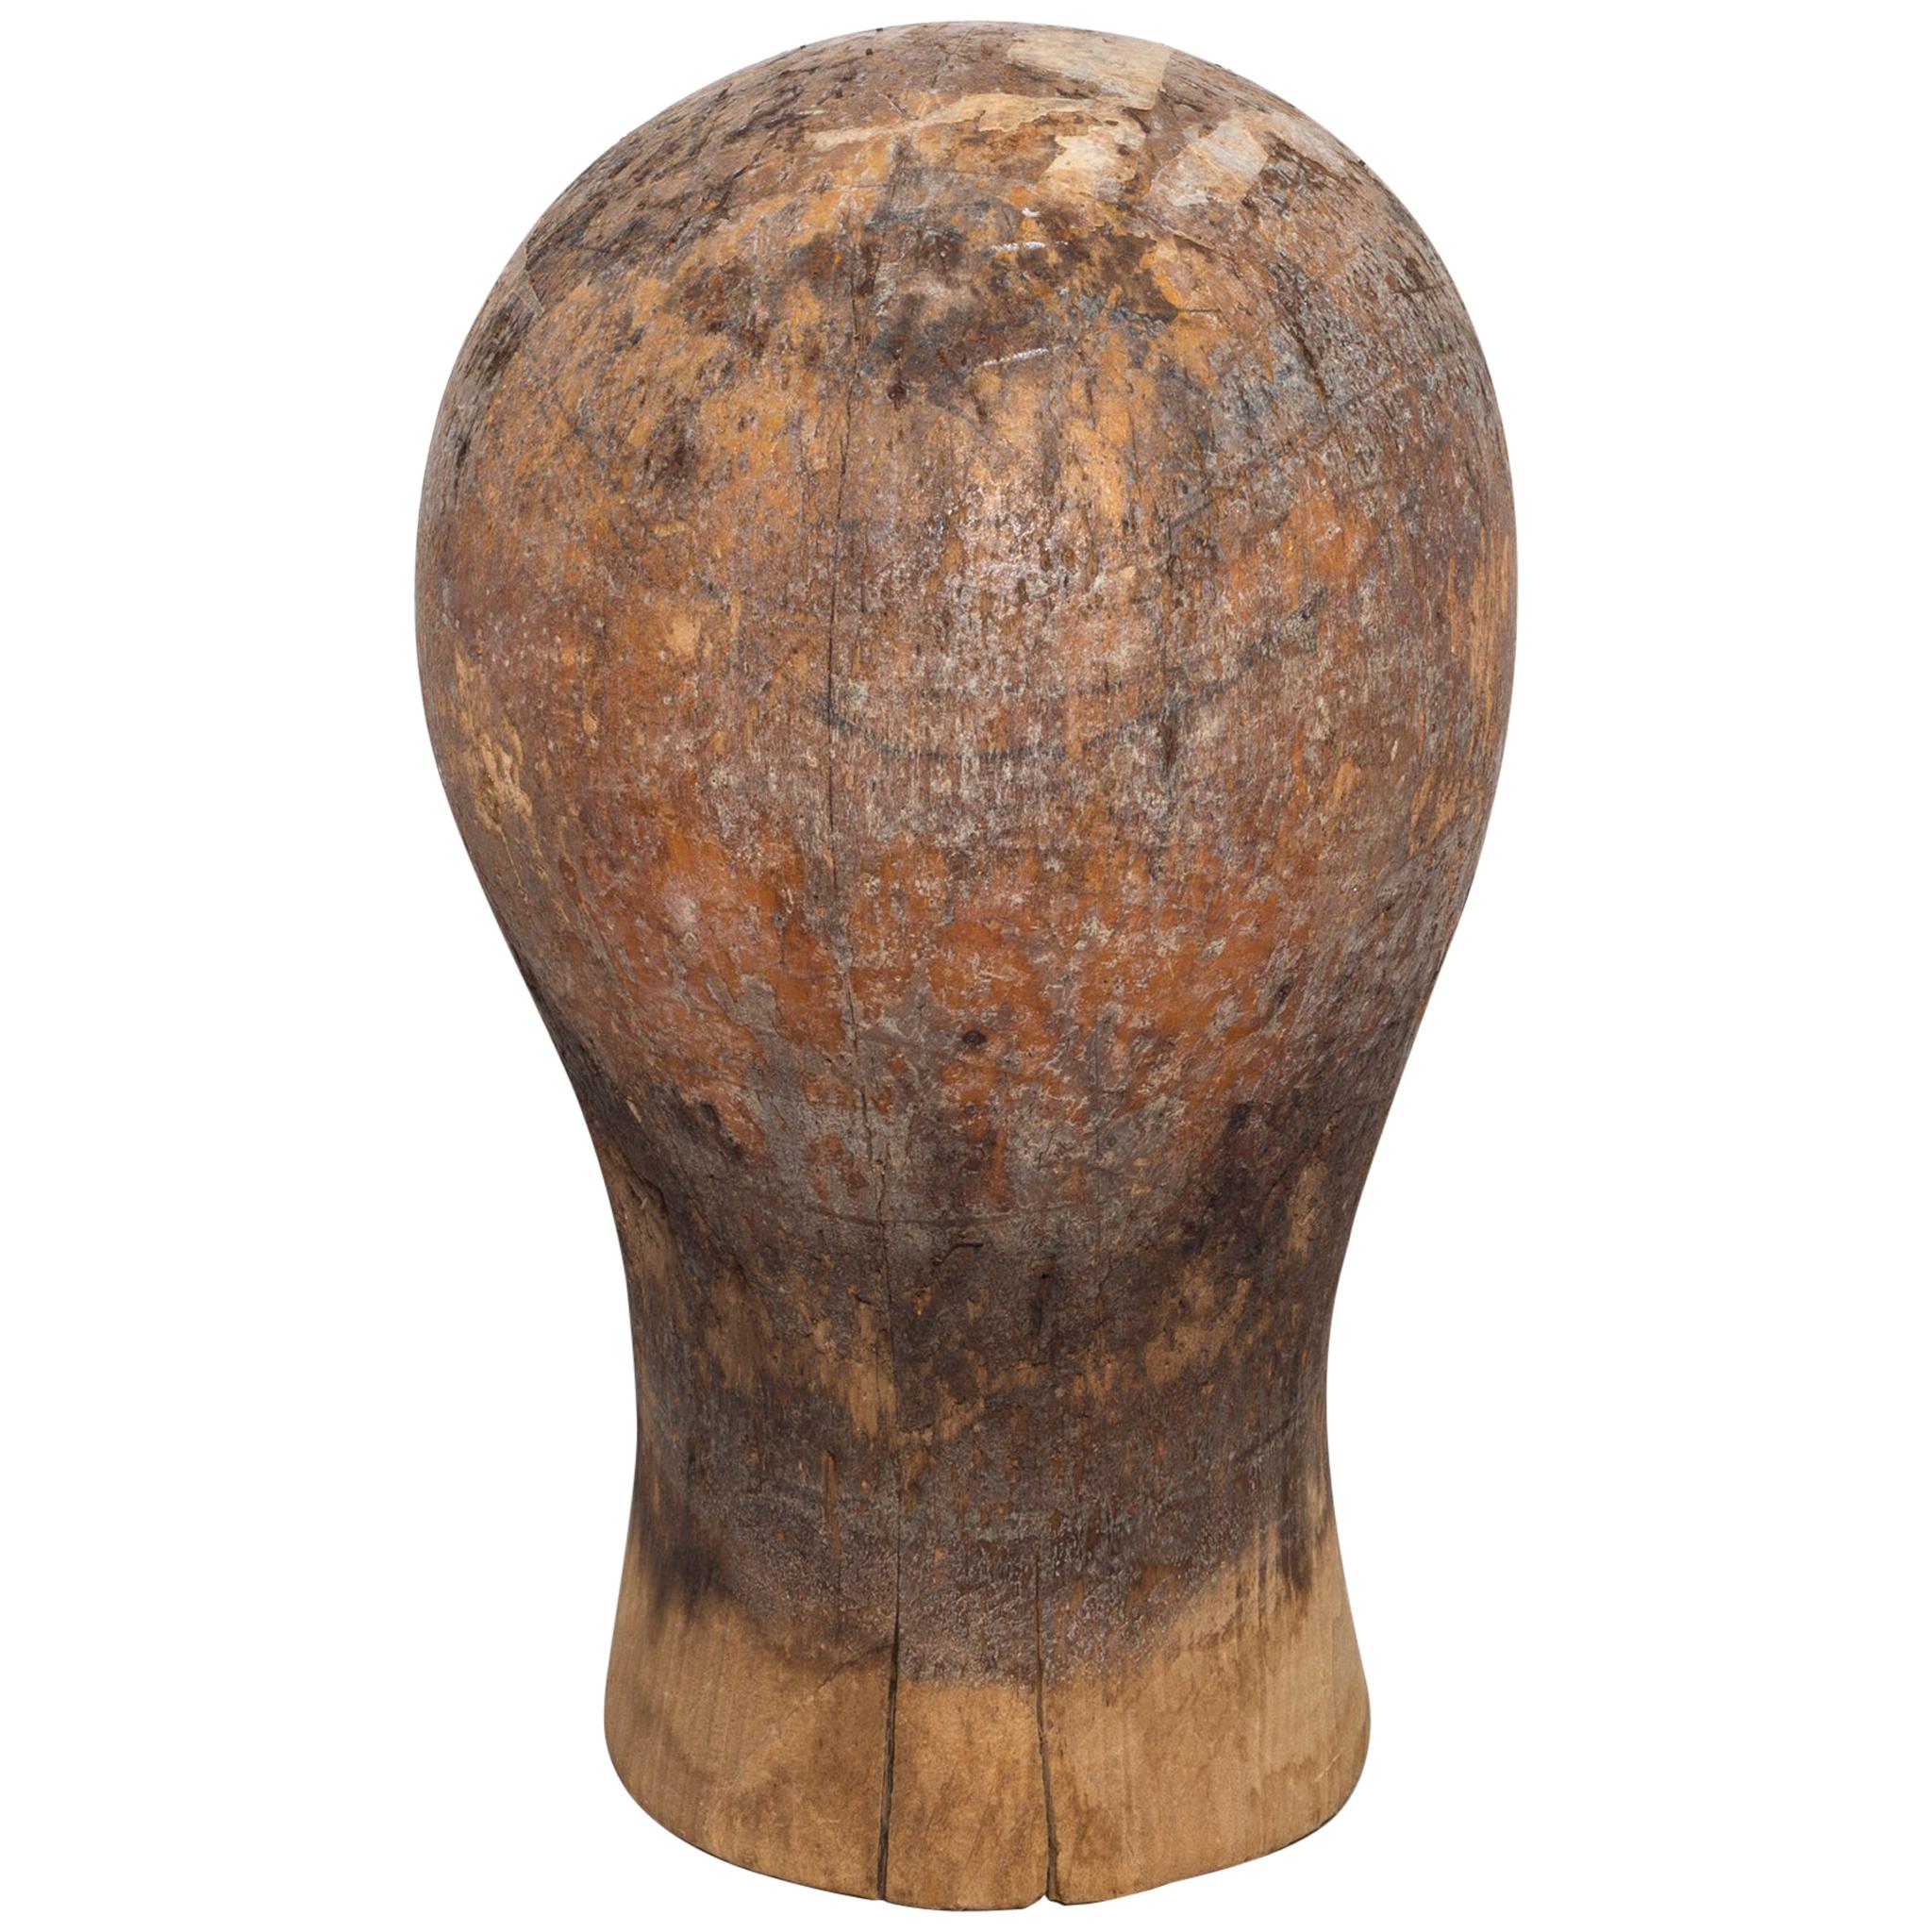 Antique Full Head Wooden Hat Mold, circa 1860-1920